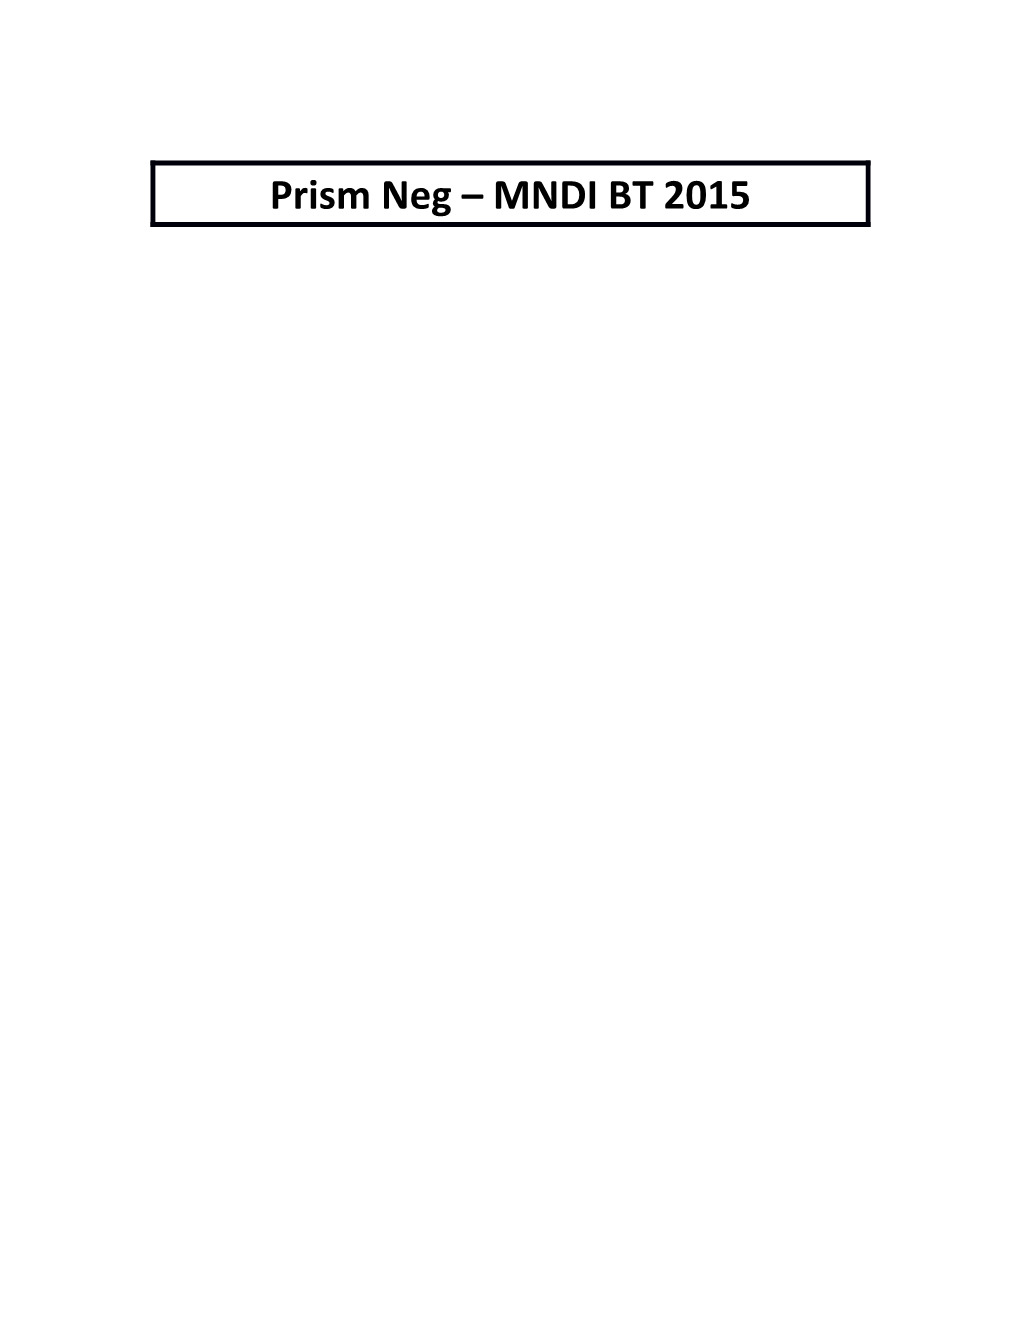 Prism Neg MNDI BT 2015